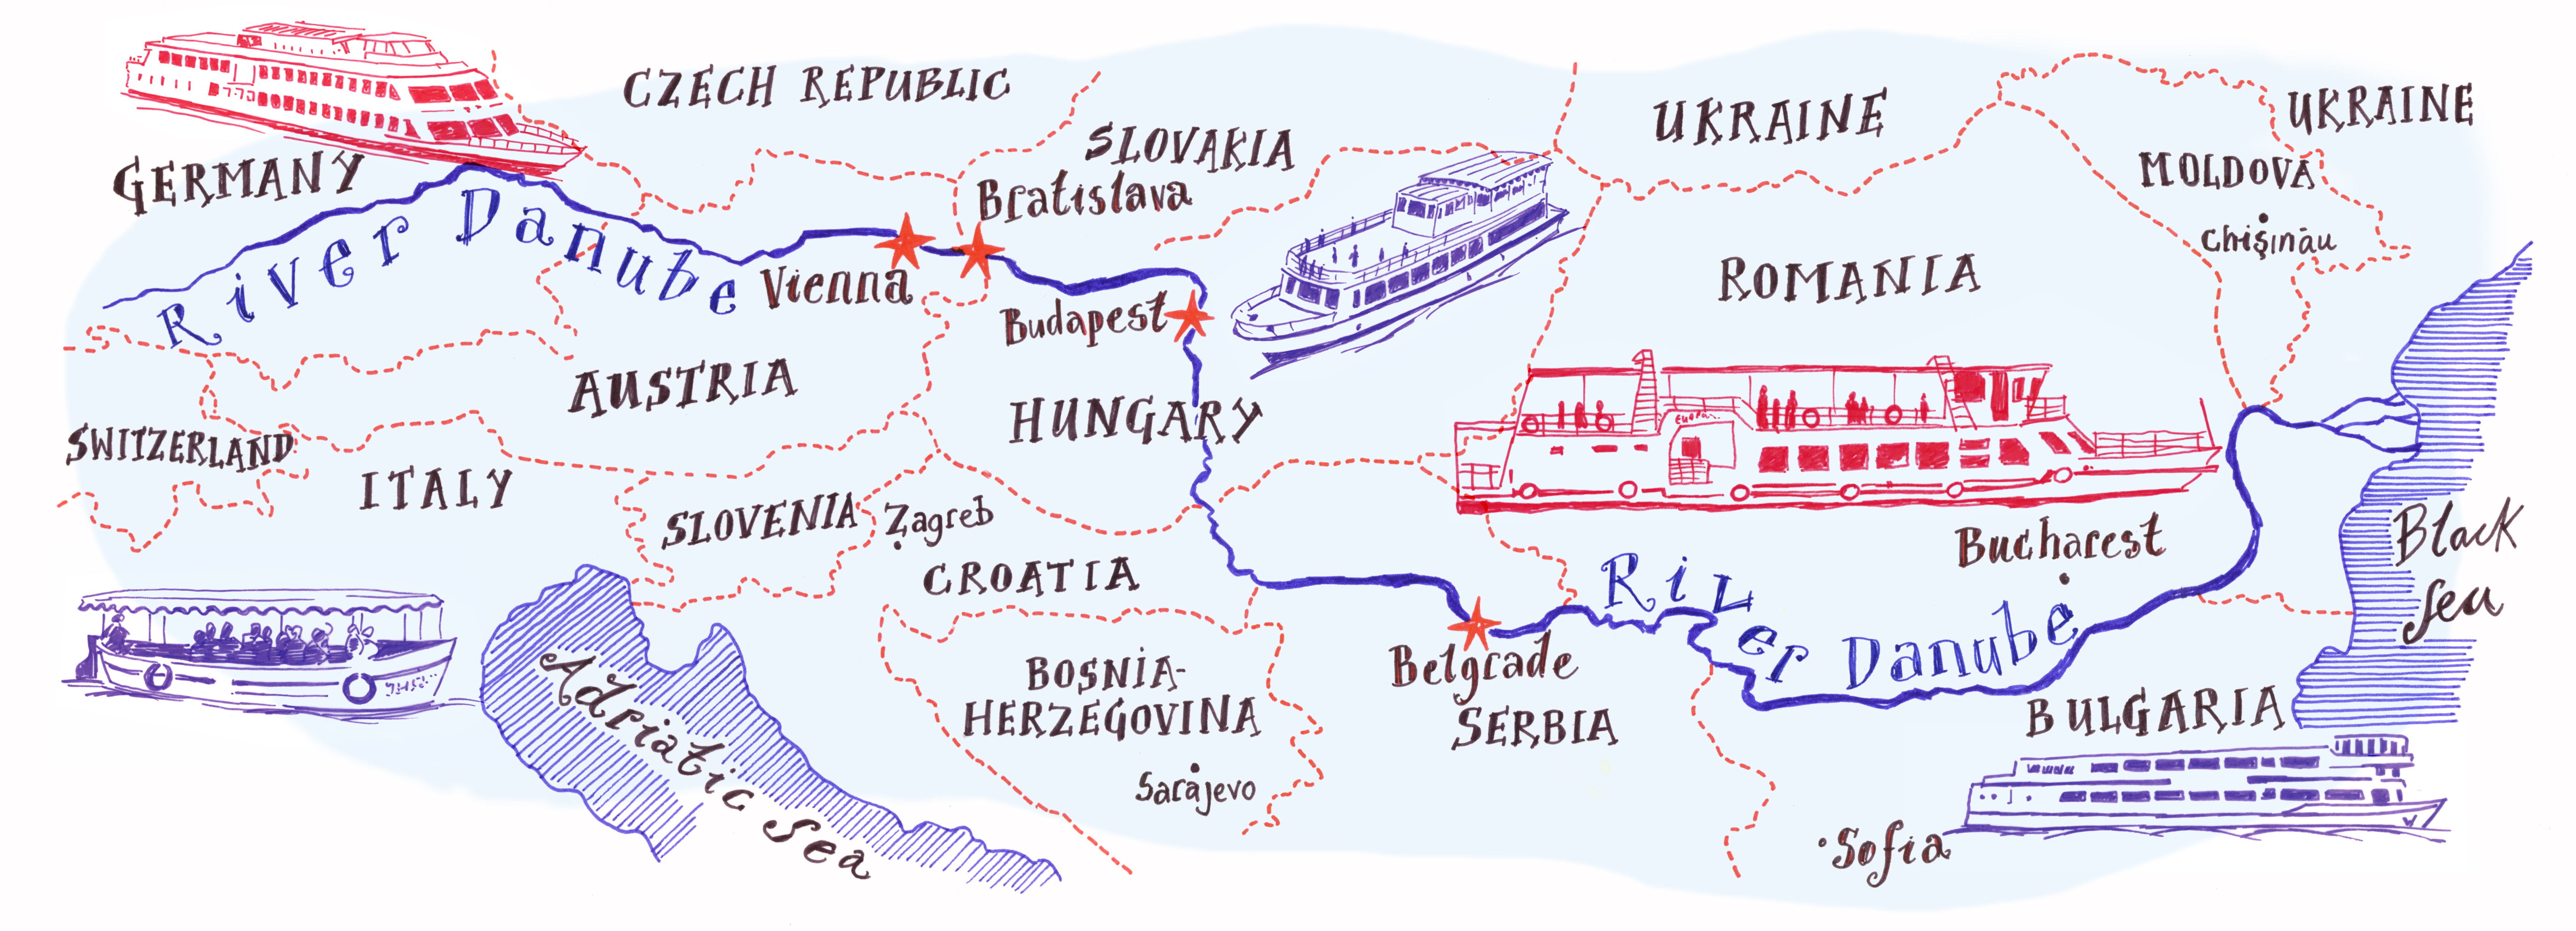 Danube-River-Basin-by-Maps-Illustrated-Map.jpg